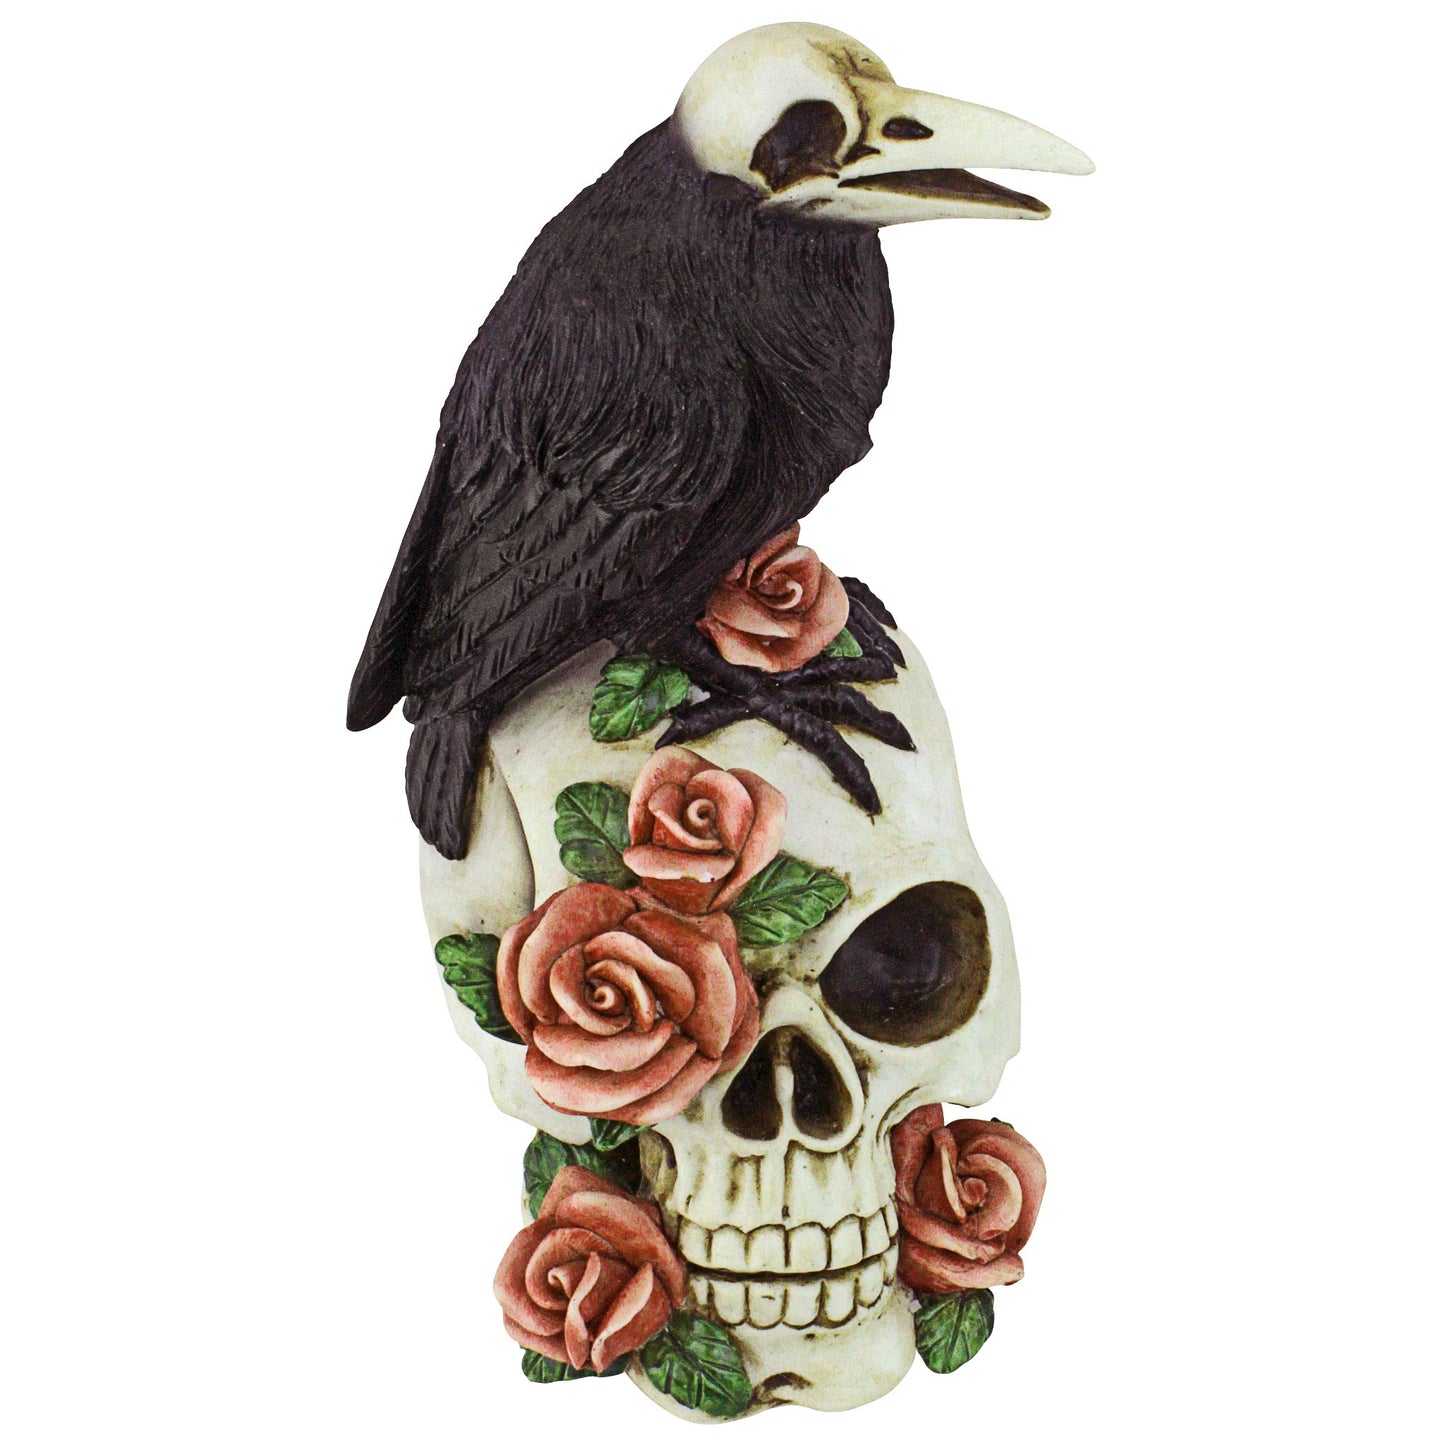 Dia de los muertos (Day of the Dead) Raven And Skull Statue